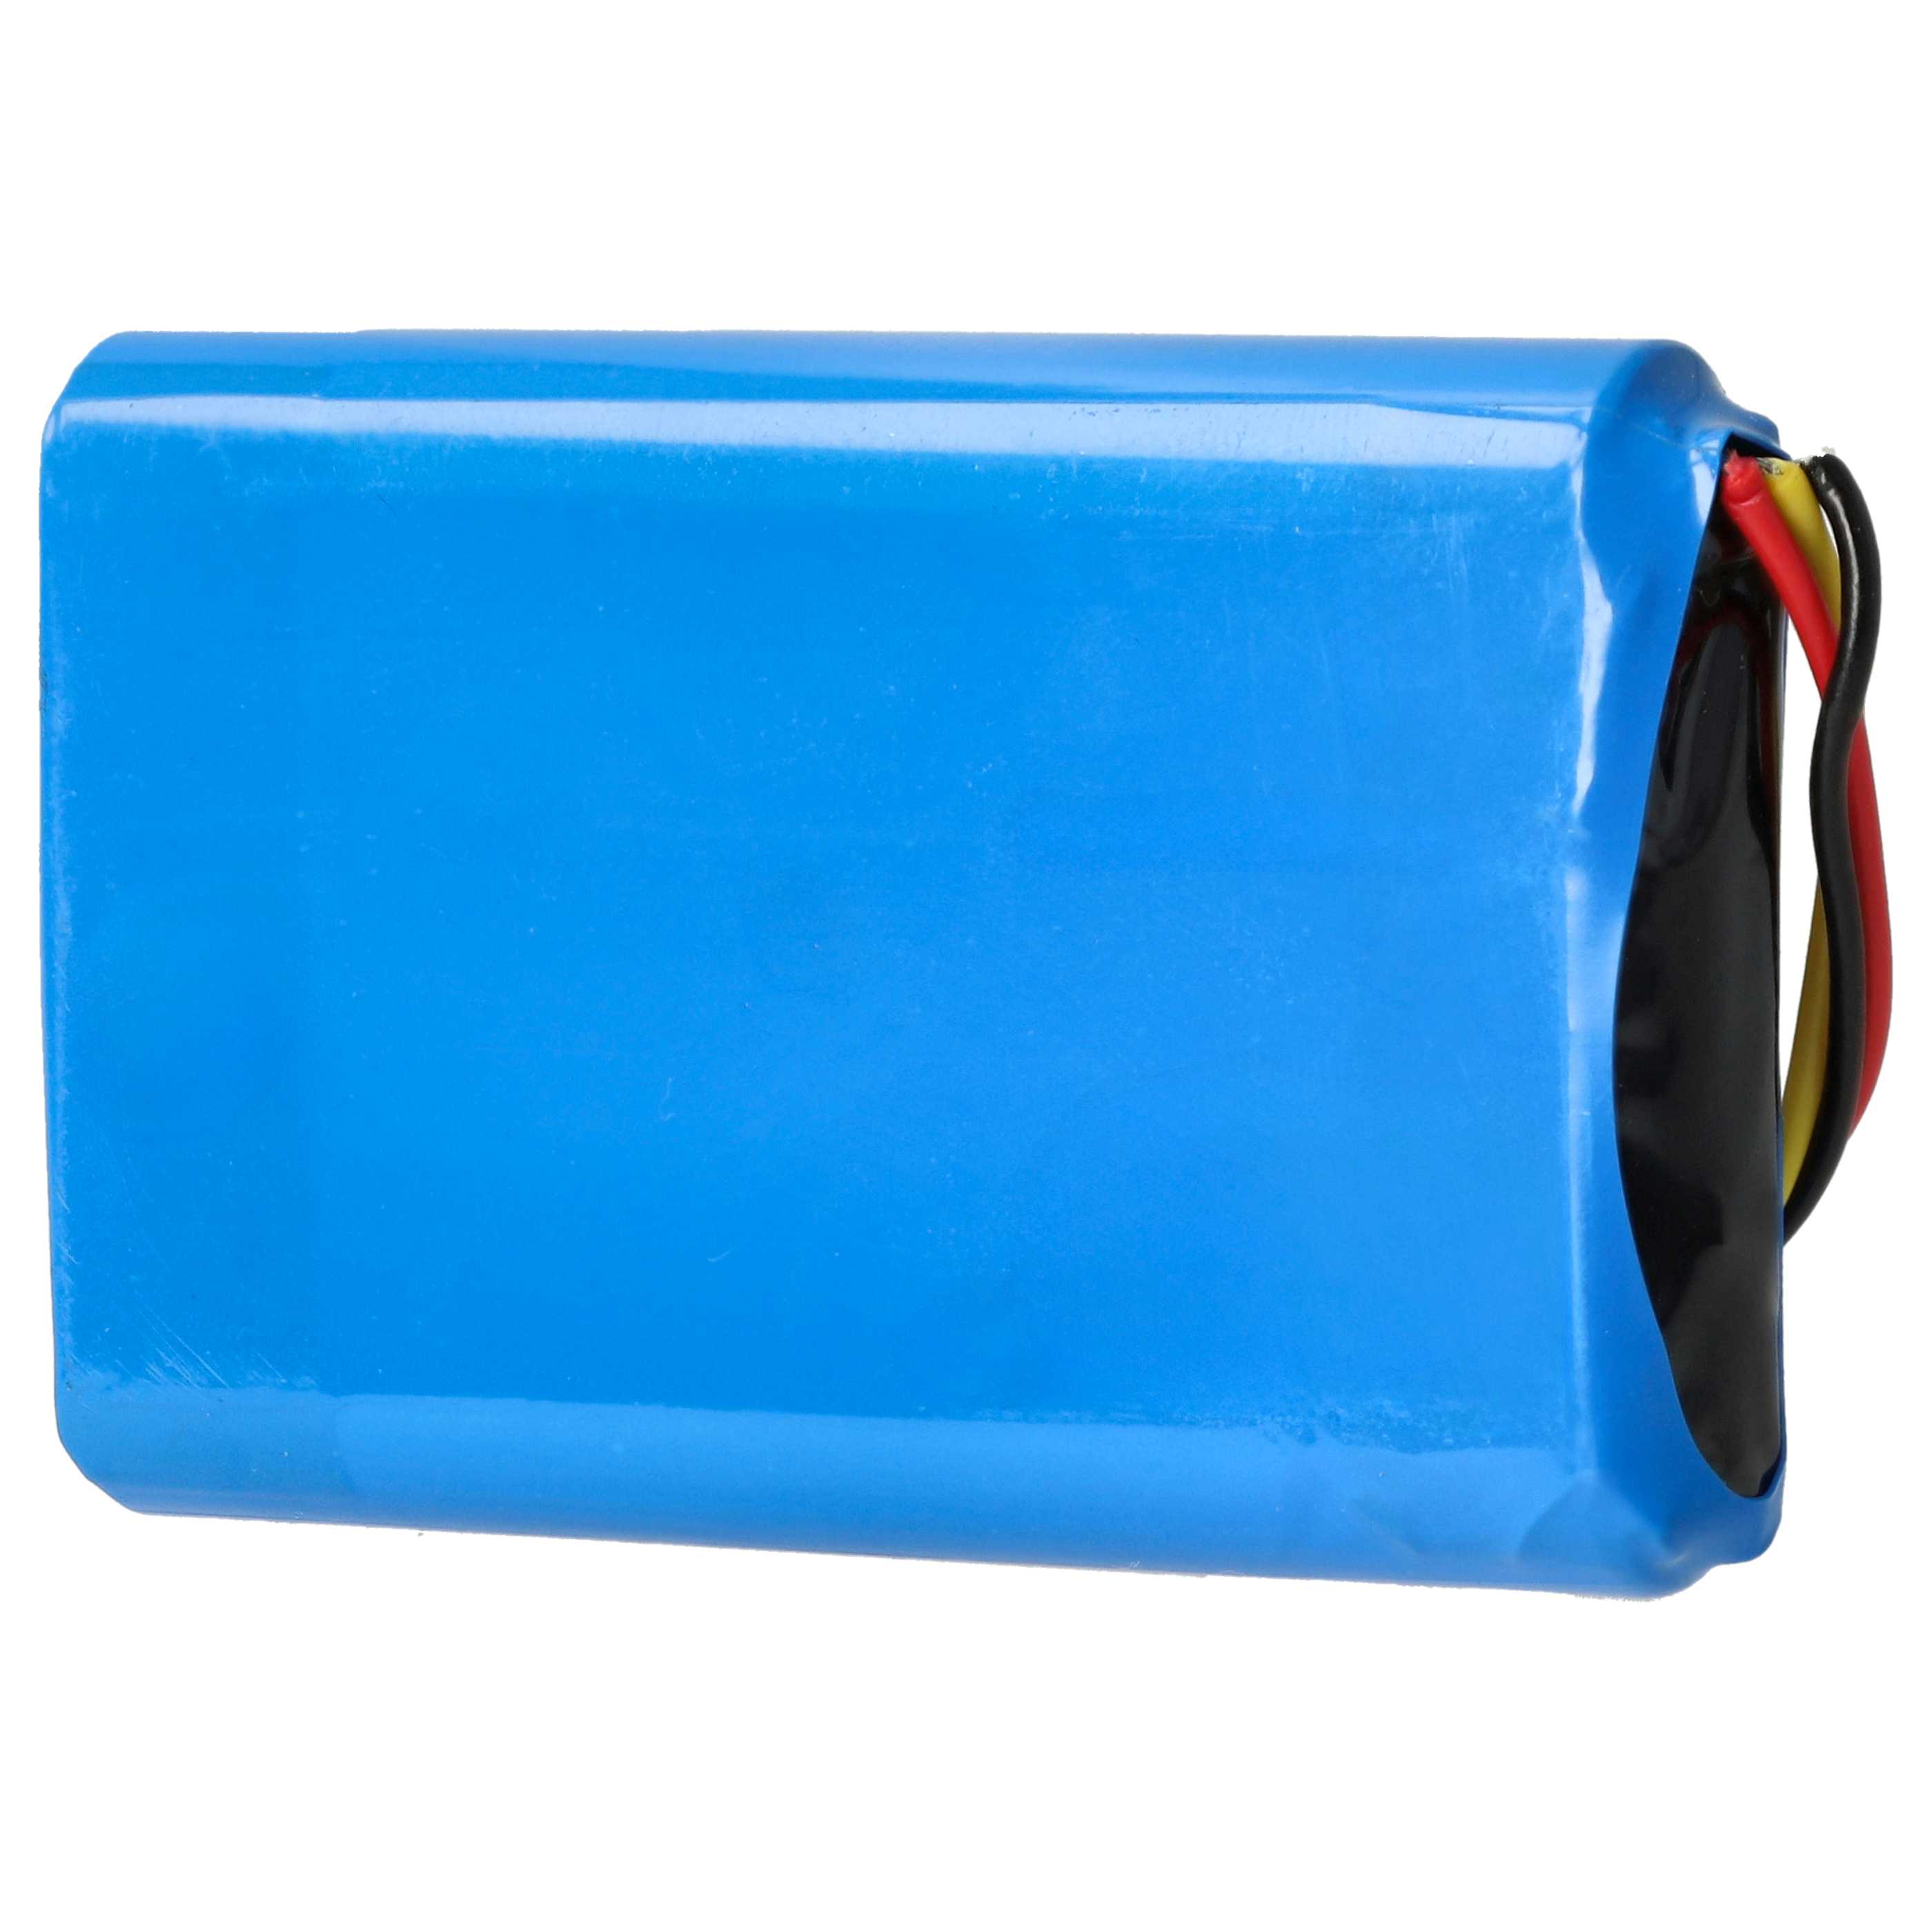 Batteria per mouse sostituisce Logitech 190247-1000, L-LB2 Logitech - 2000mAh 3,7V Li-Ion